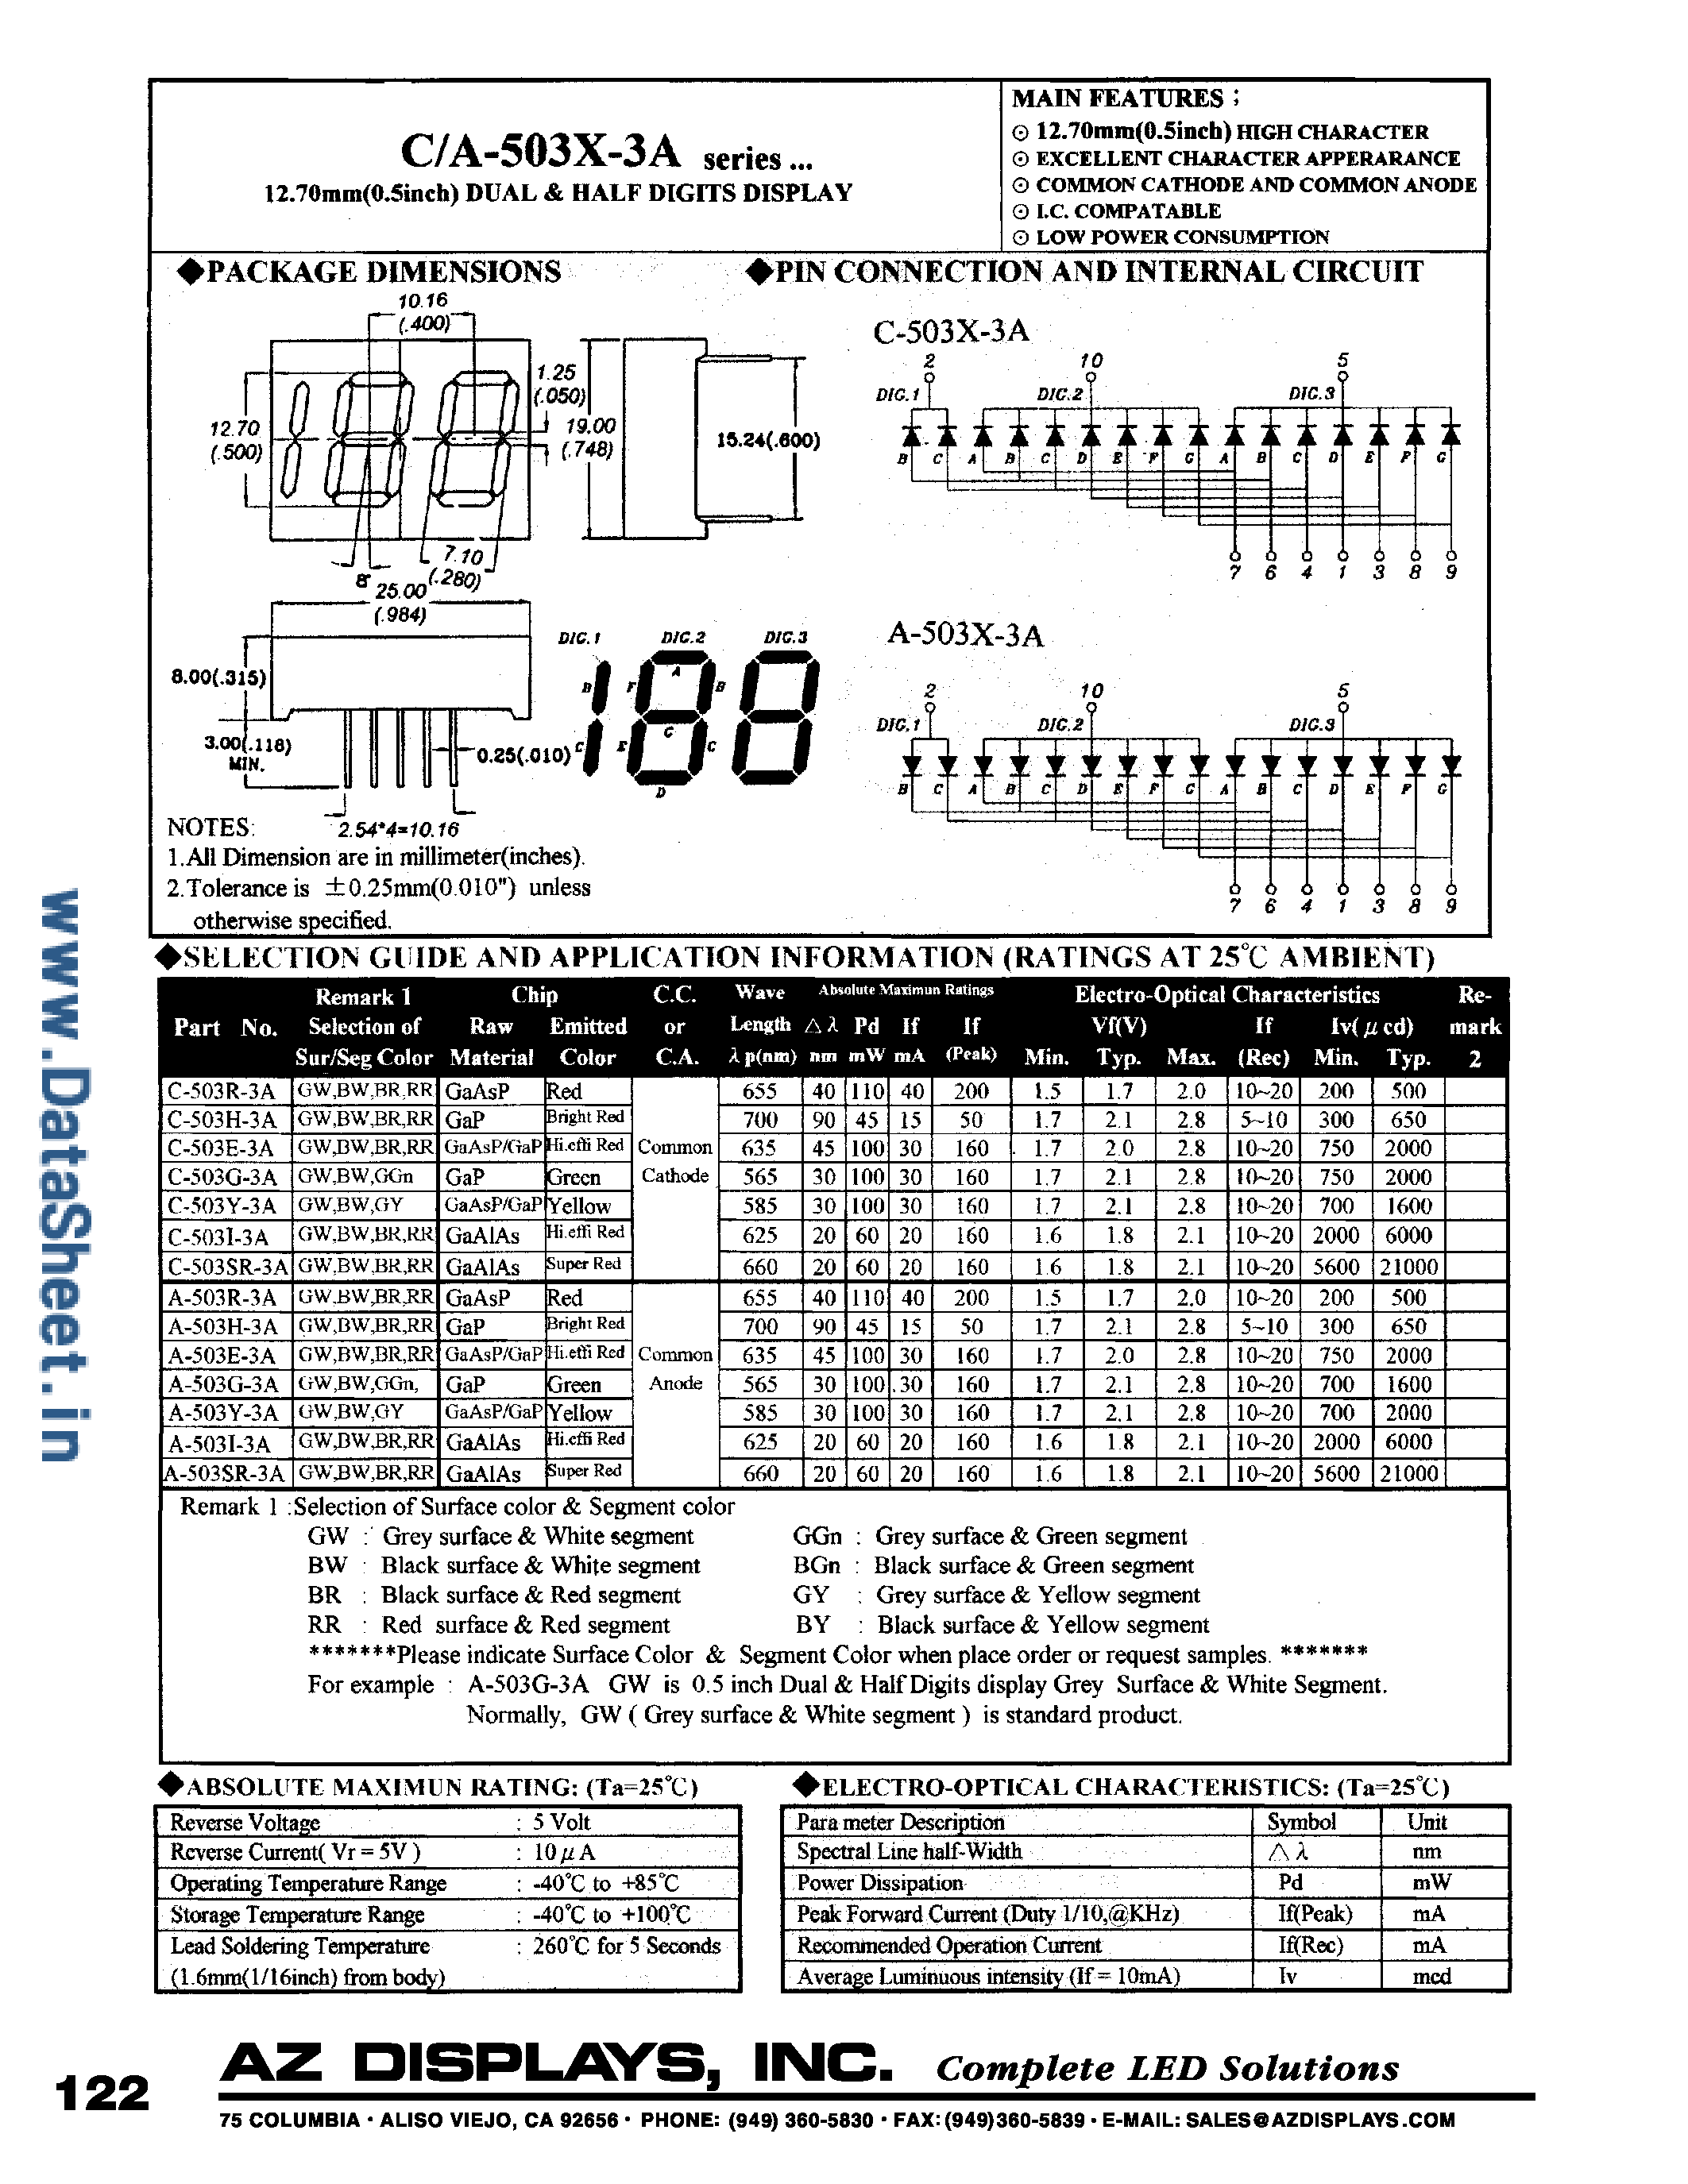 Даташит A-503E-3A - (A-503x-3A) Dual & Half Digital Display страница 1